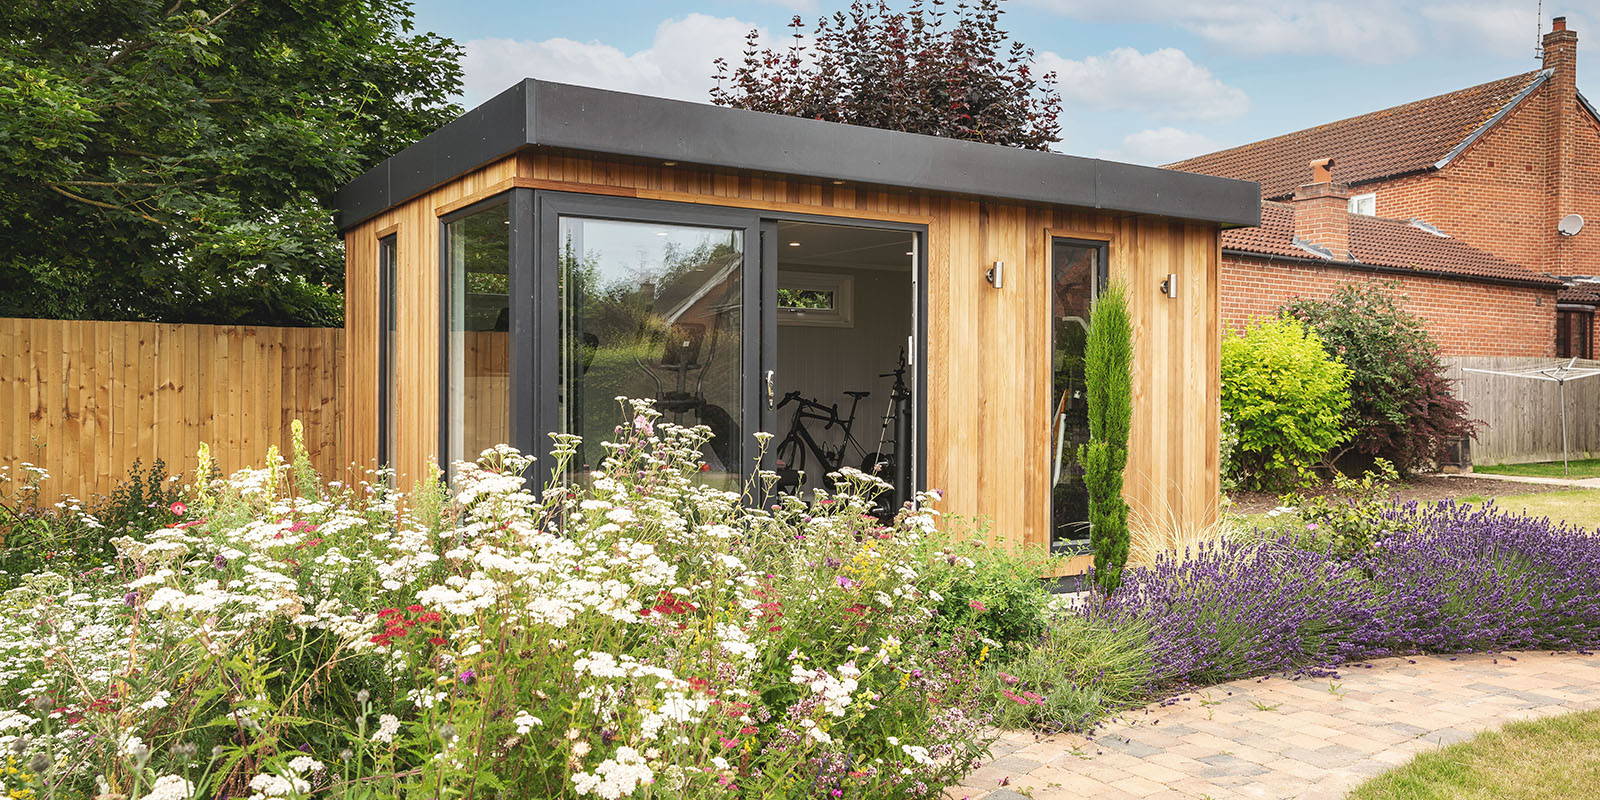 Small insulated garden room gym built in cedar in pretty english garden 